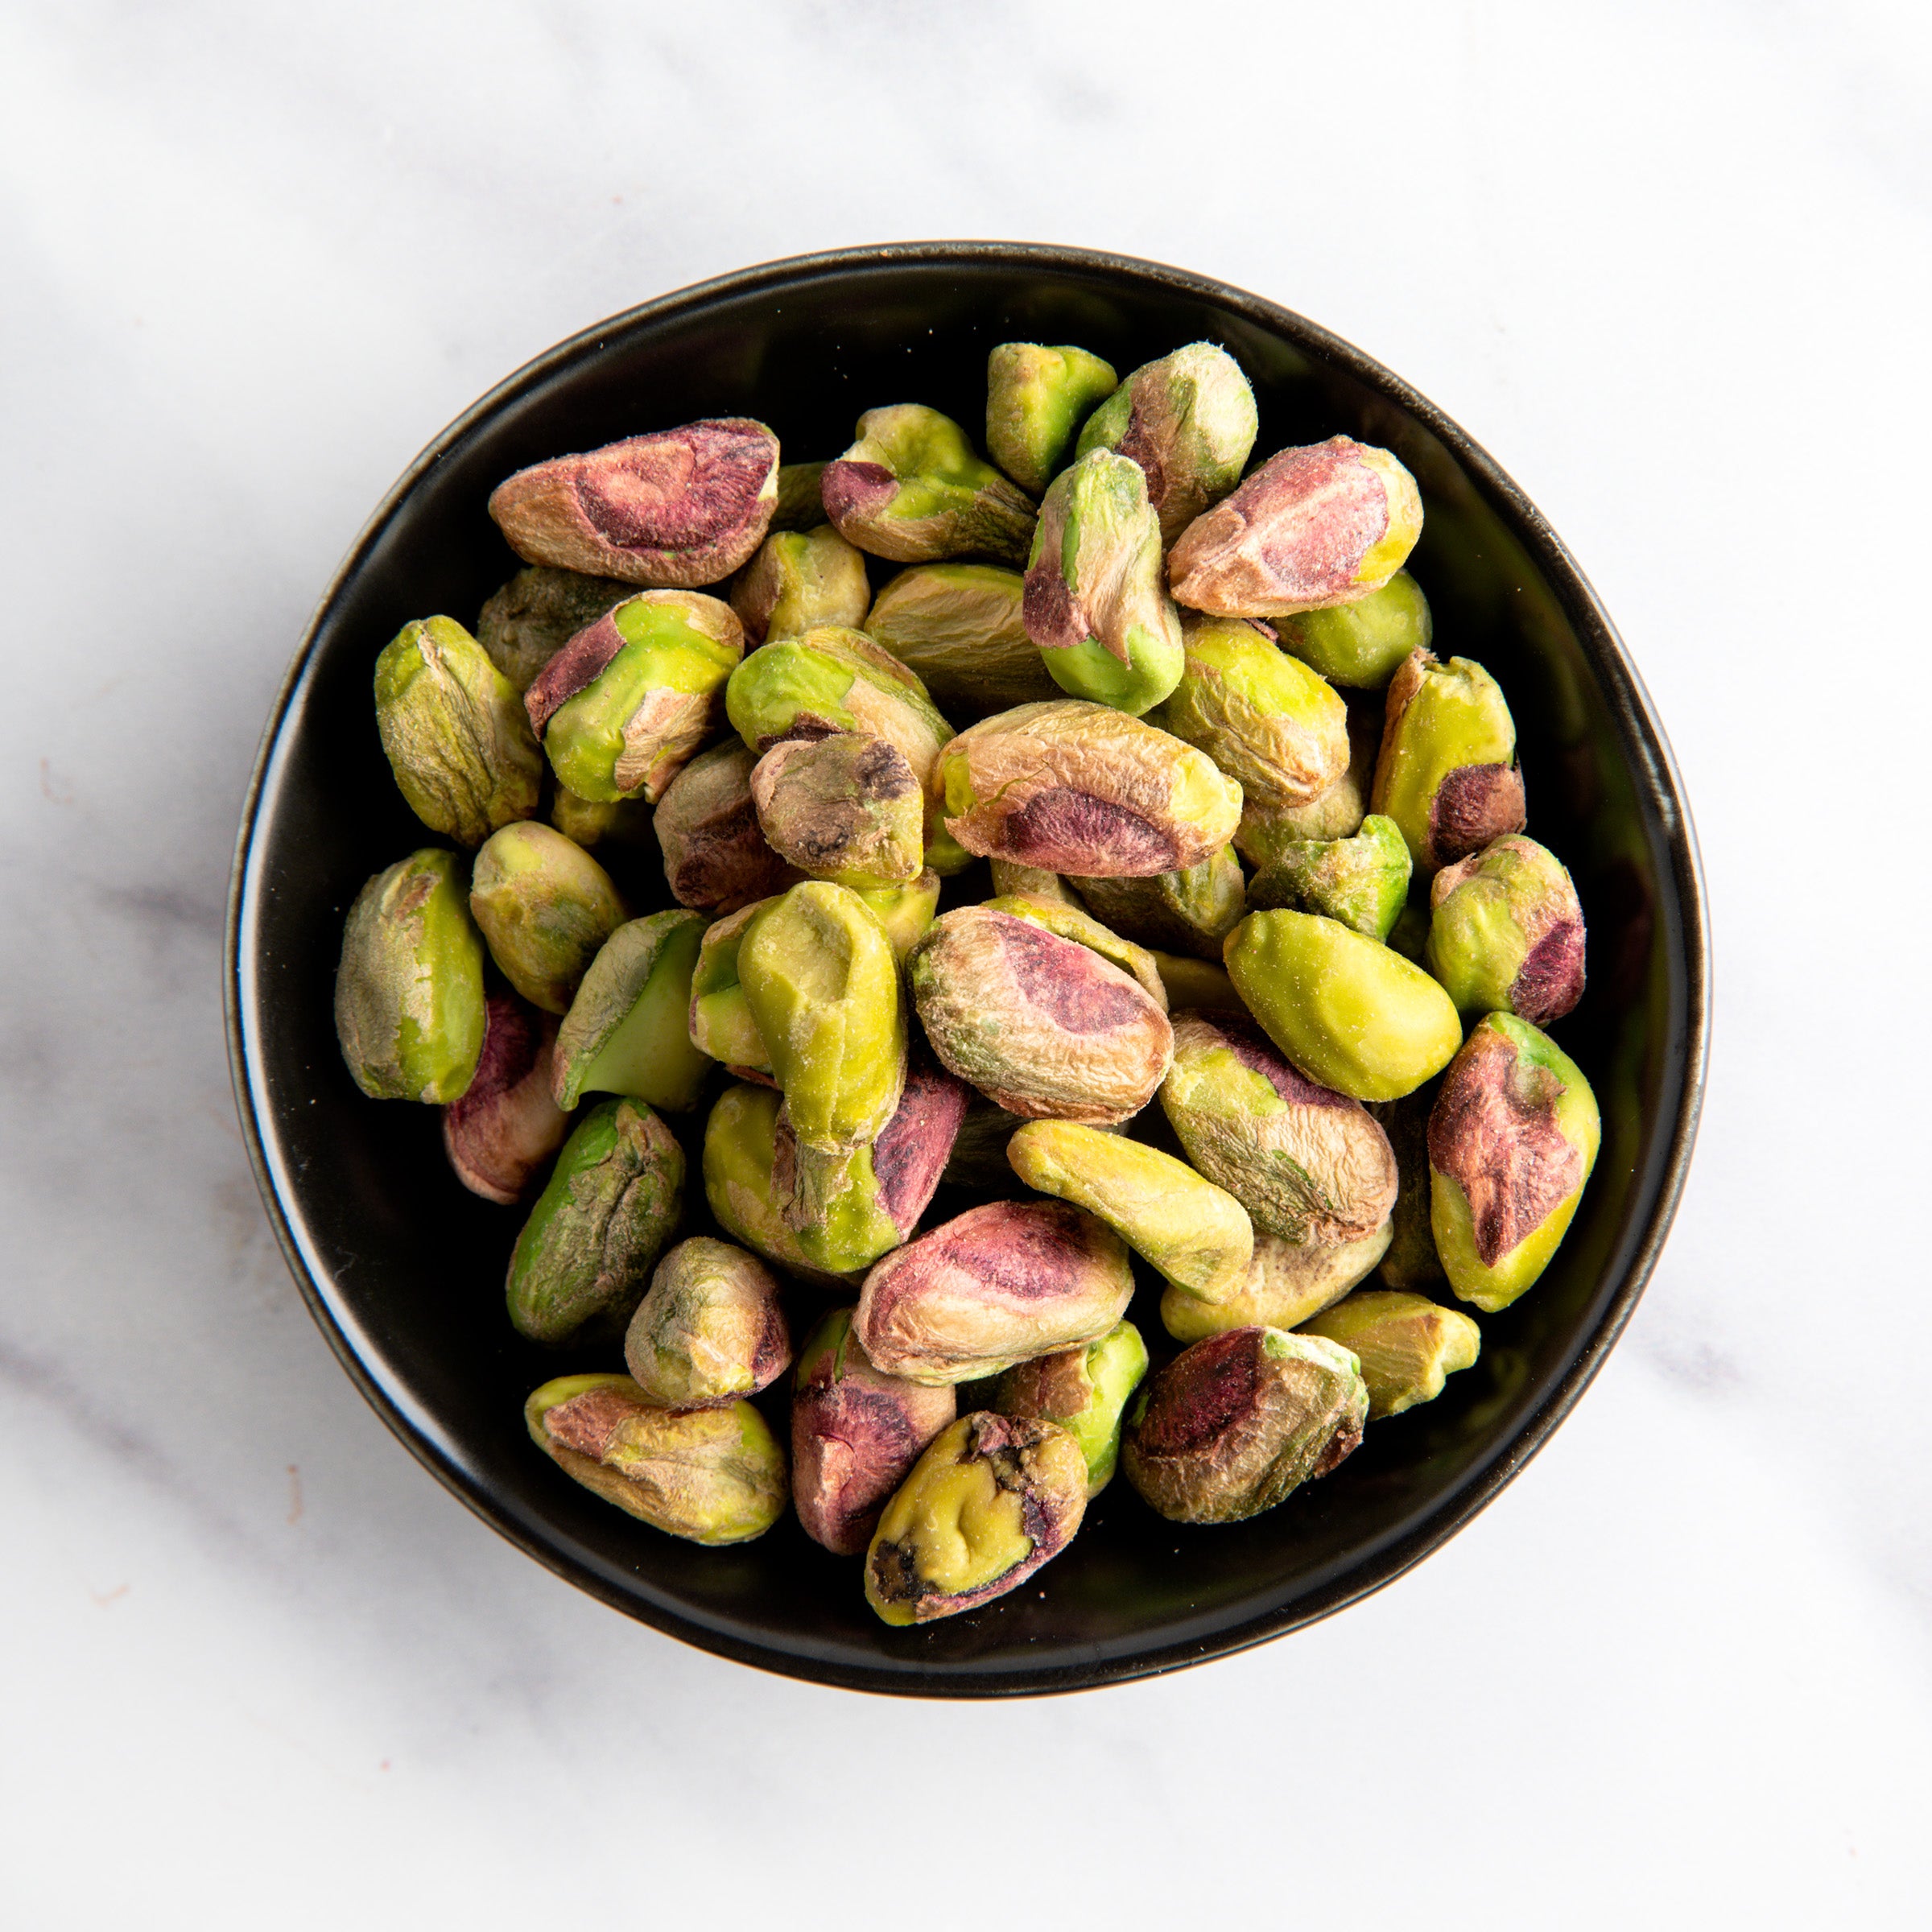 Organic Shelled Pistachios - International Harvest - Nuts & Seeds